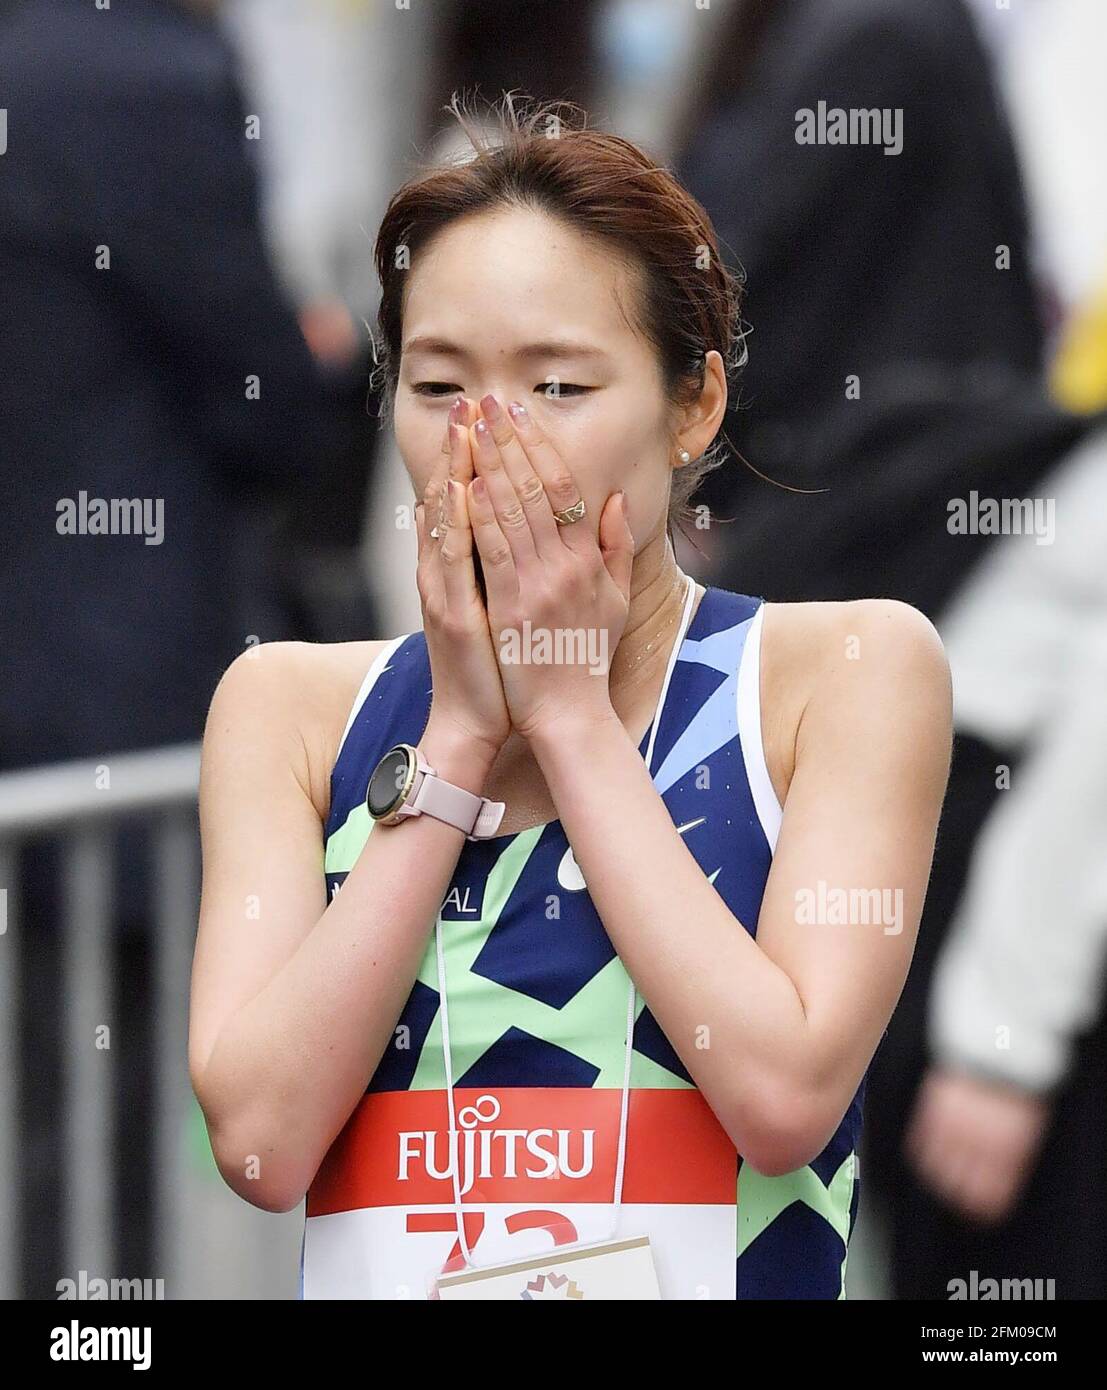 Mao Ichiyama Reacts After Winning A Half Marathon Race Held At The Venue Of The Tokyo Olympics